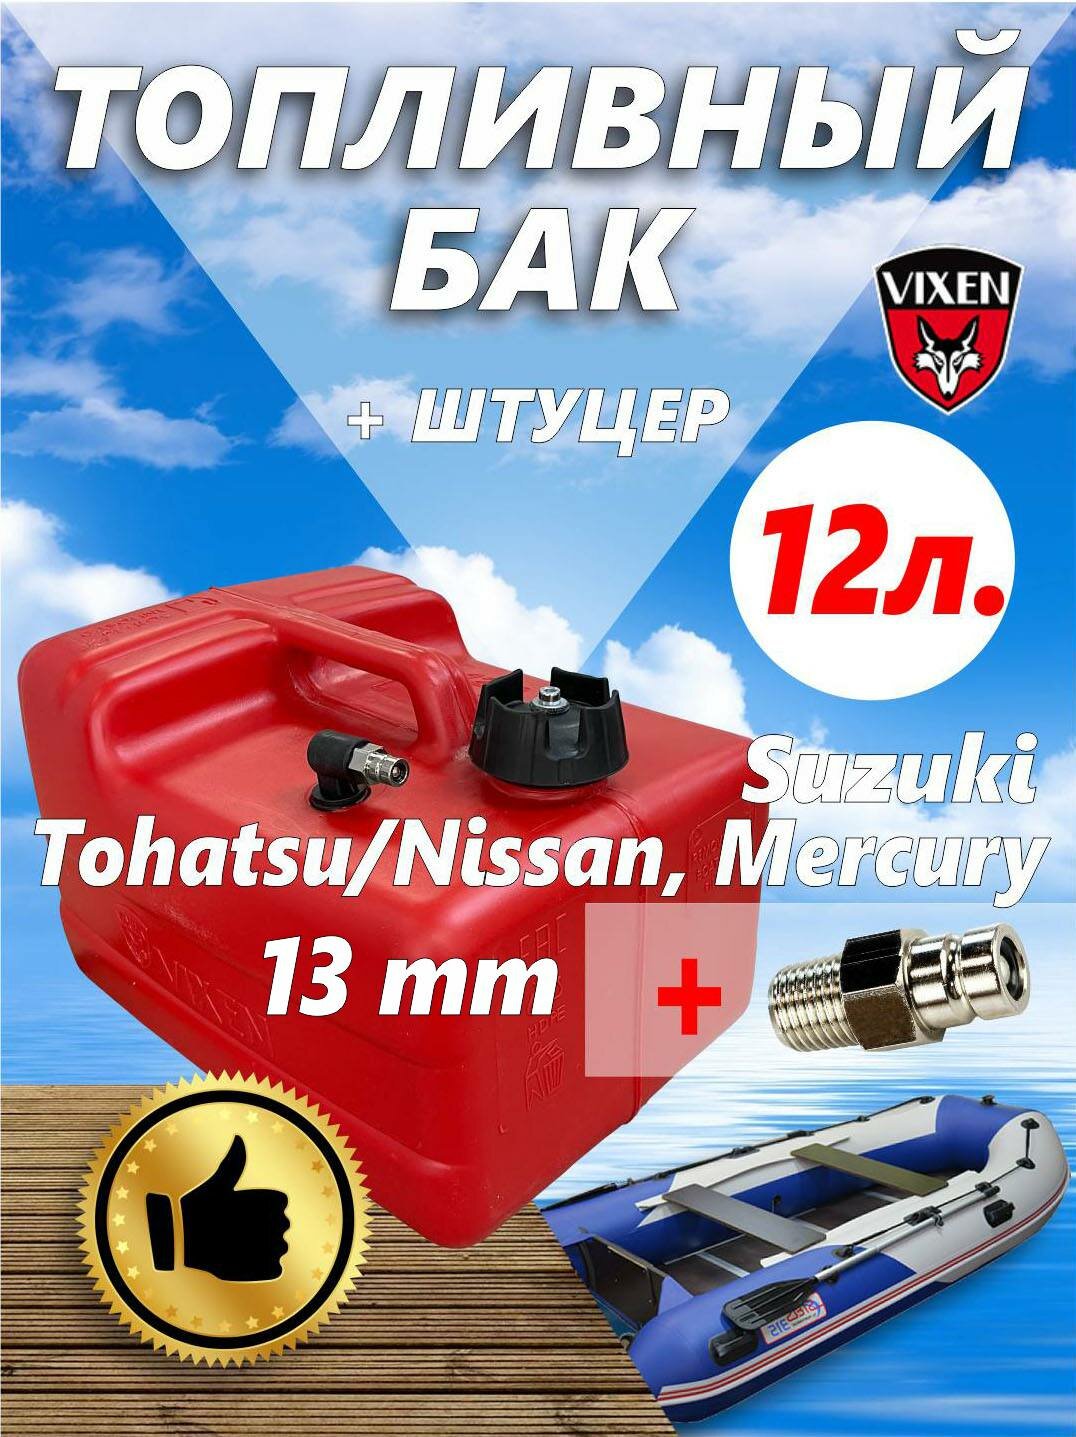 Переносной топливный бак 12 л (Suzuki - 13 мм Tohatsu/Nissan Mercury Japan)